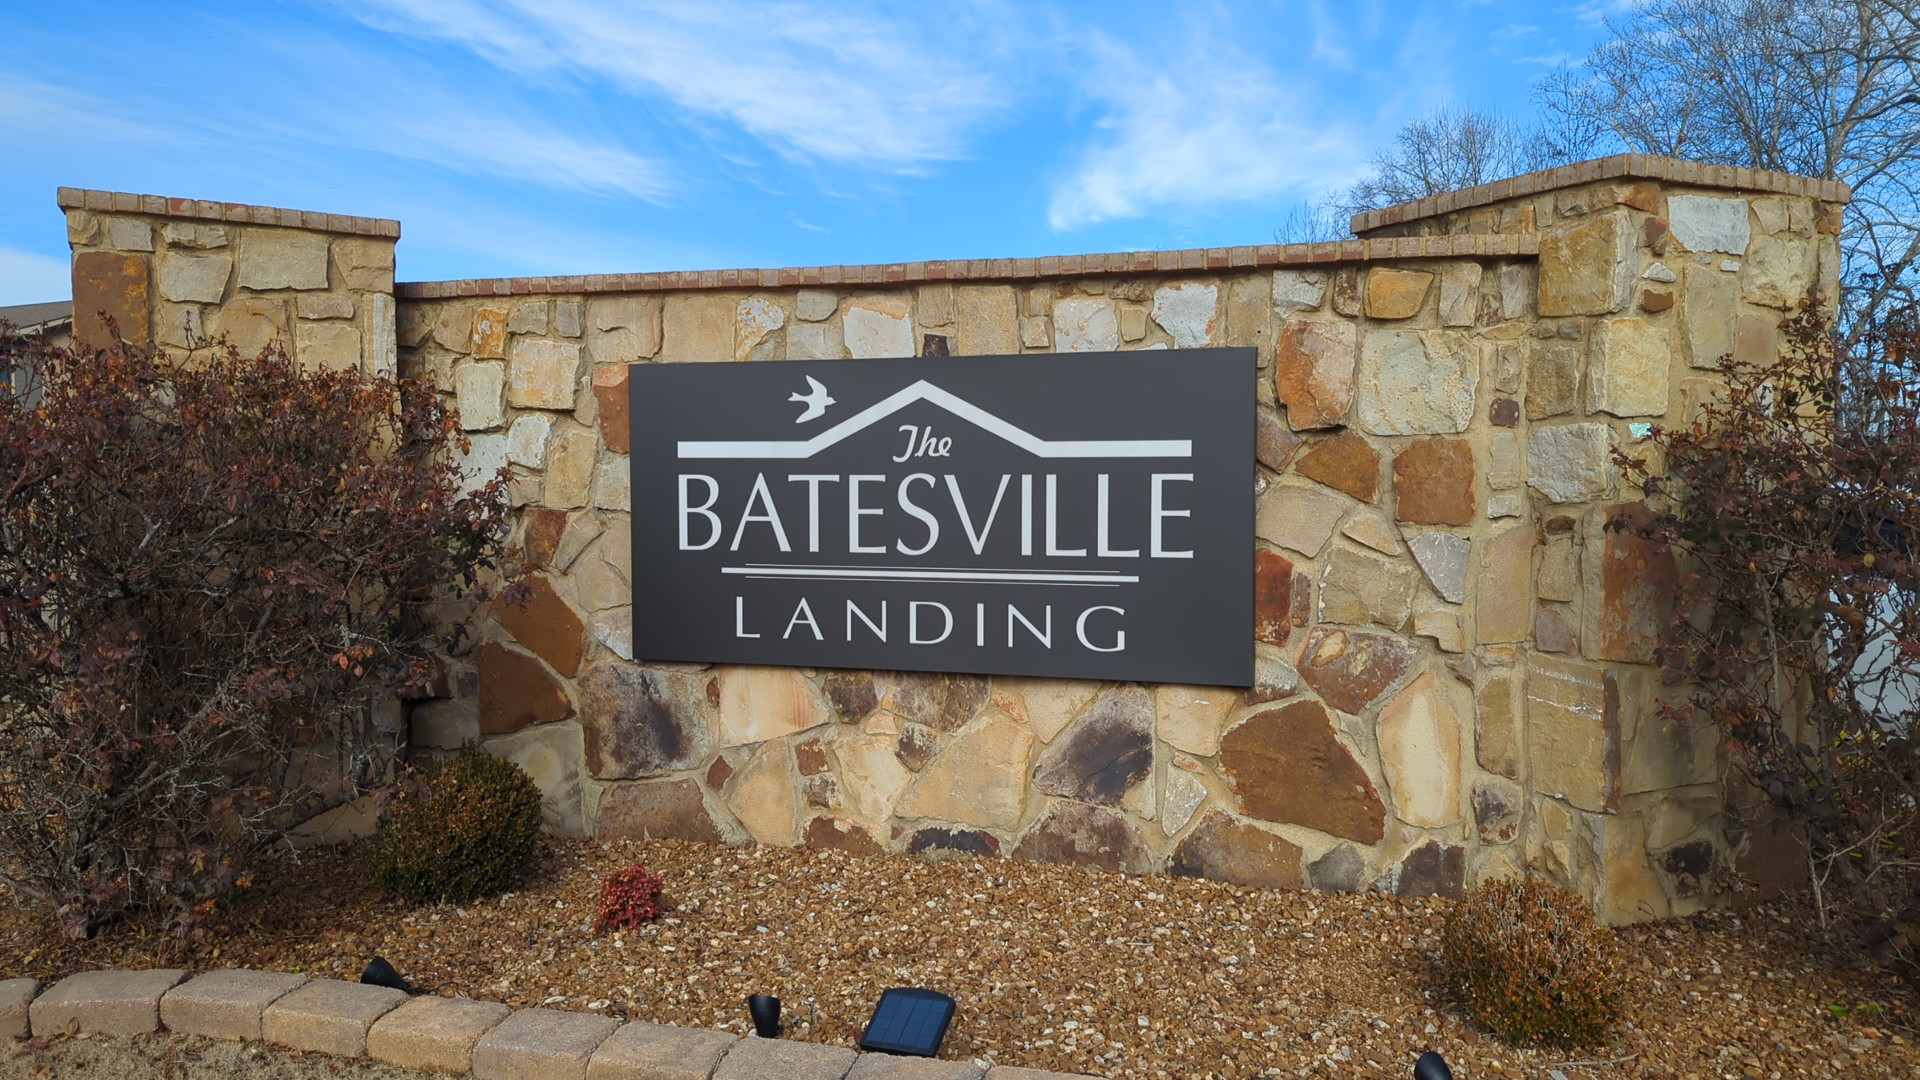 The Batesville Landing